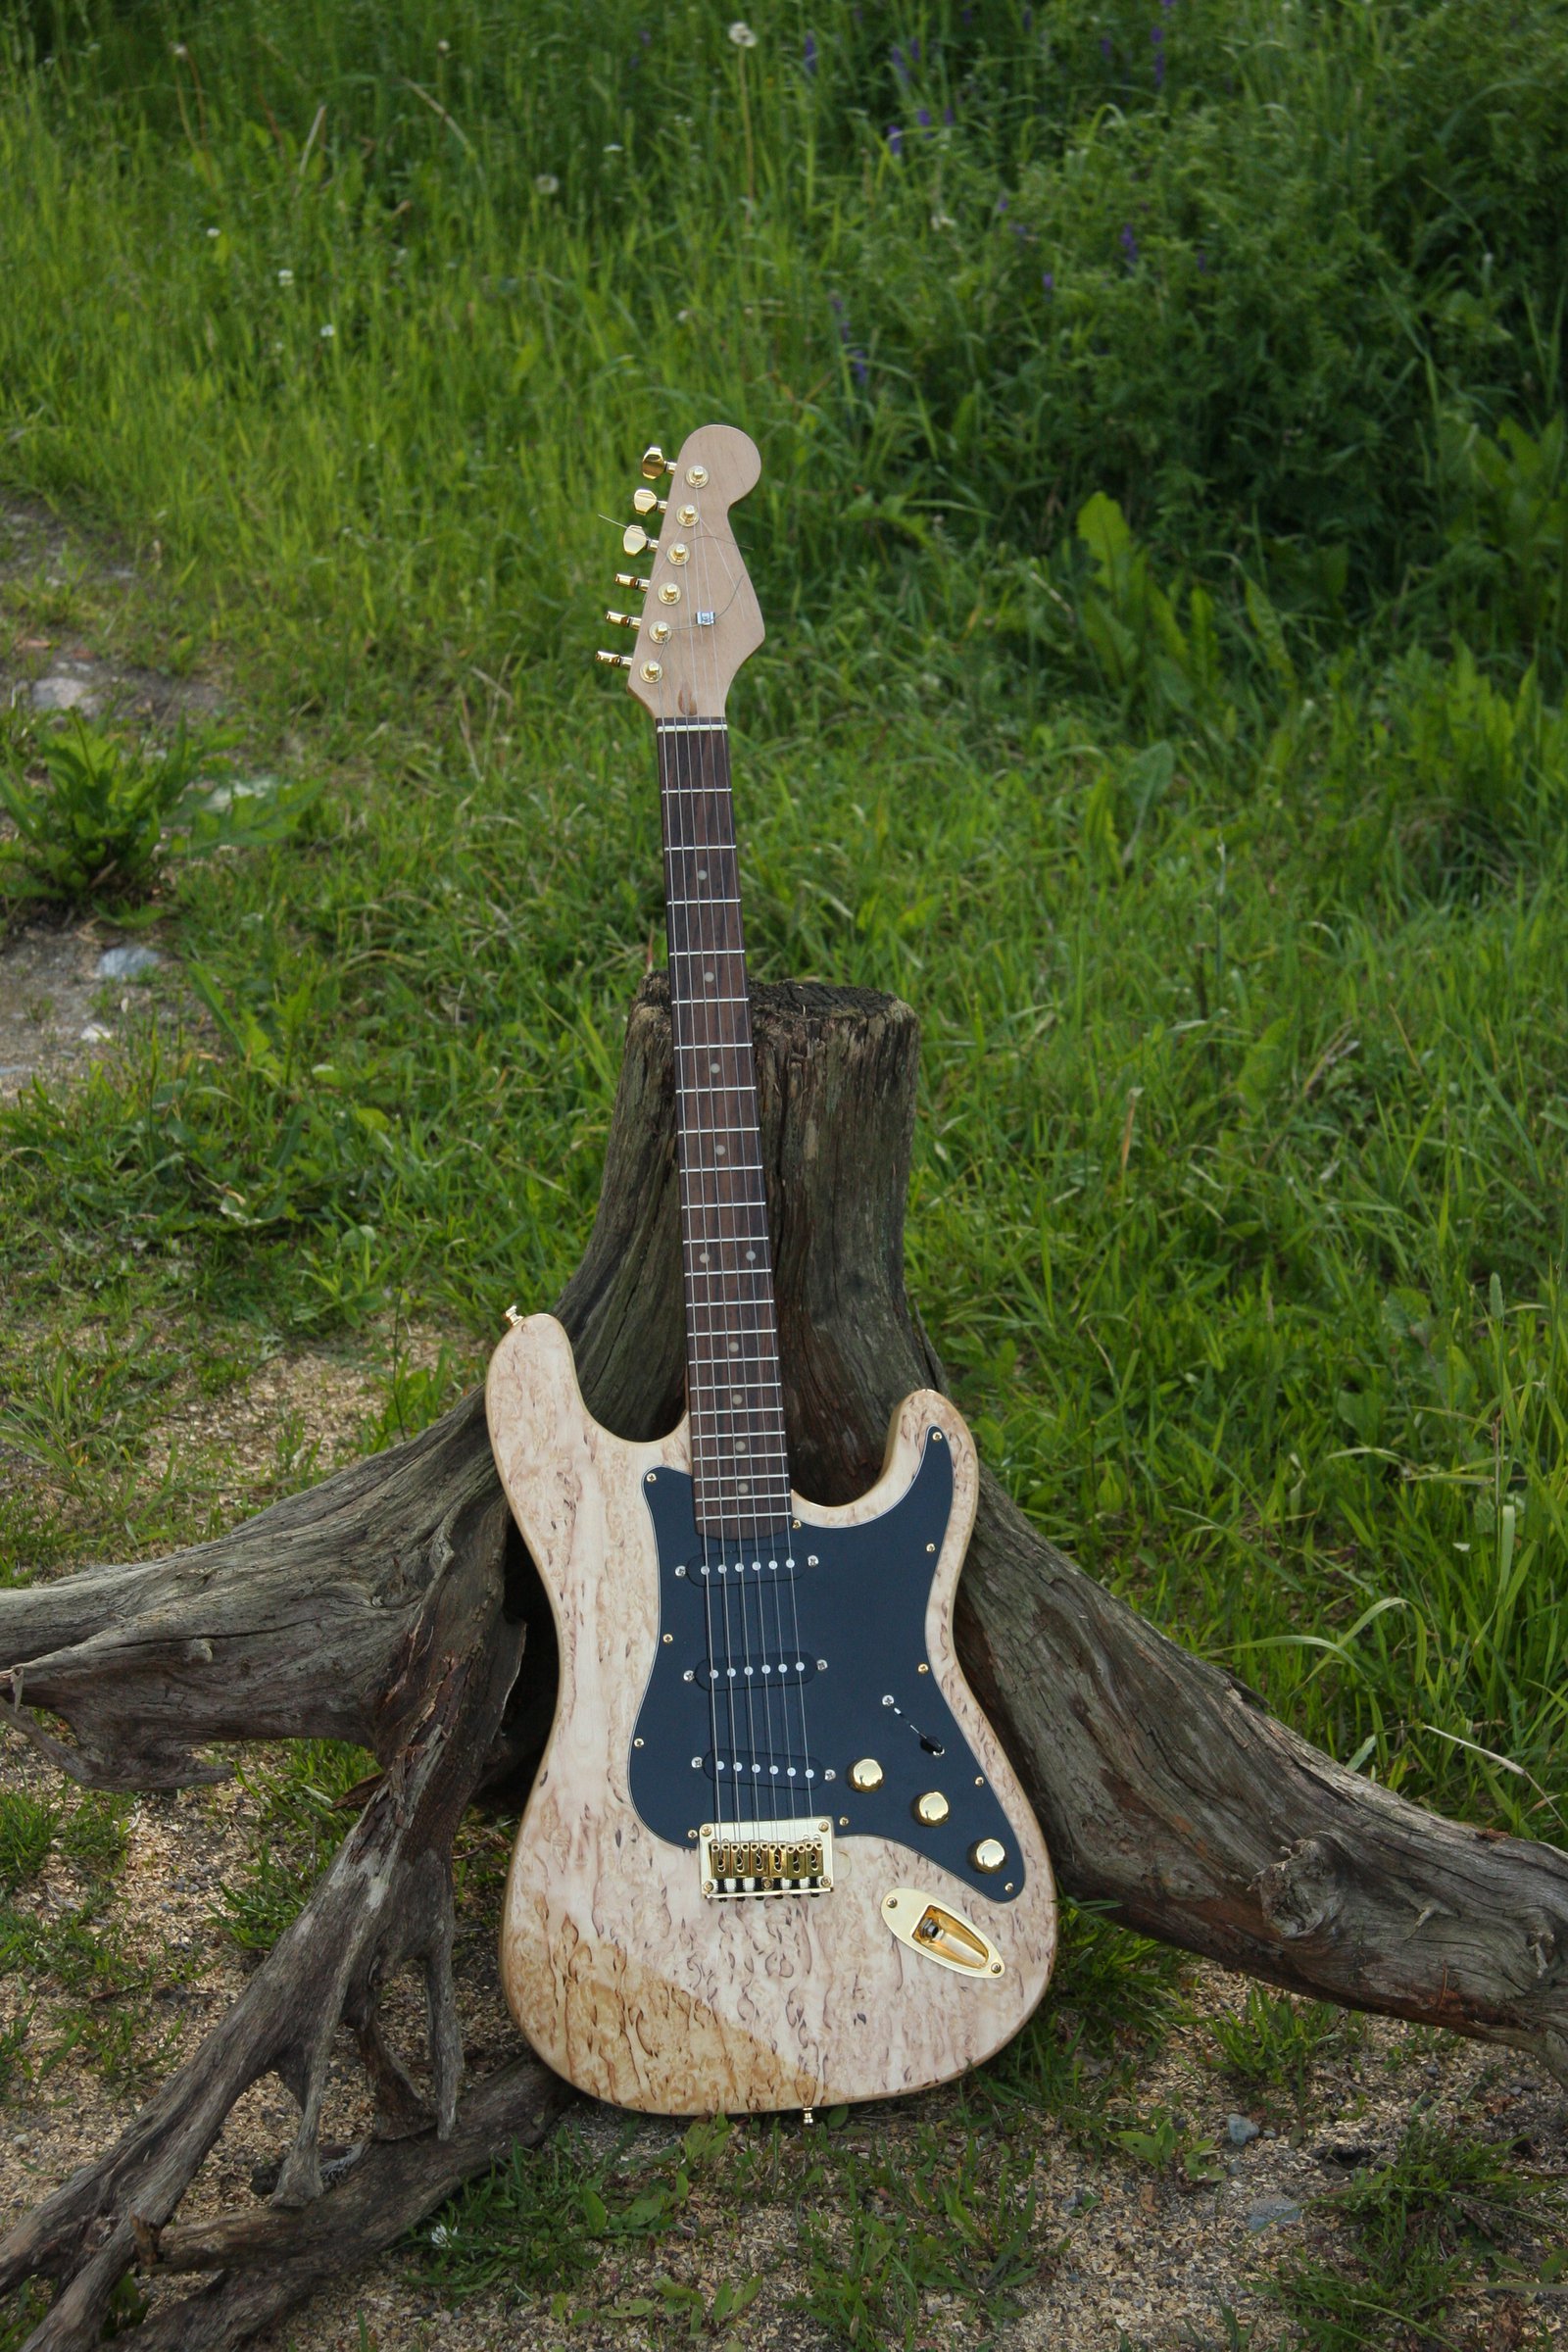 Self-made guitar